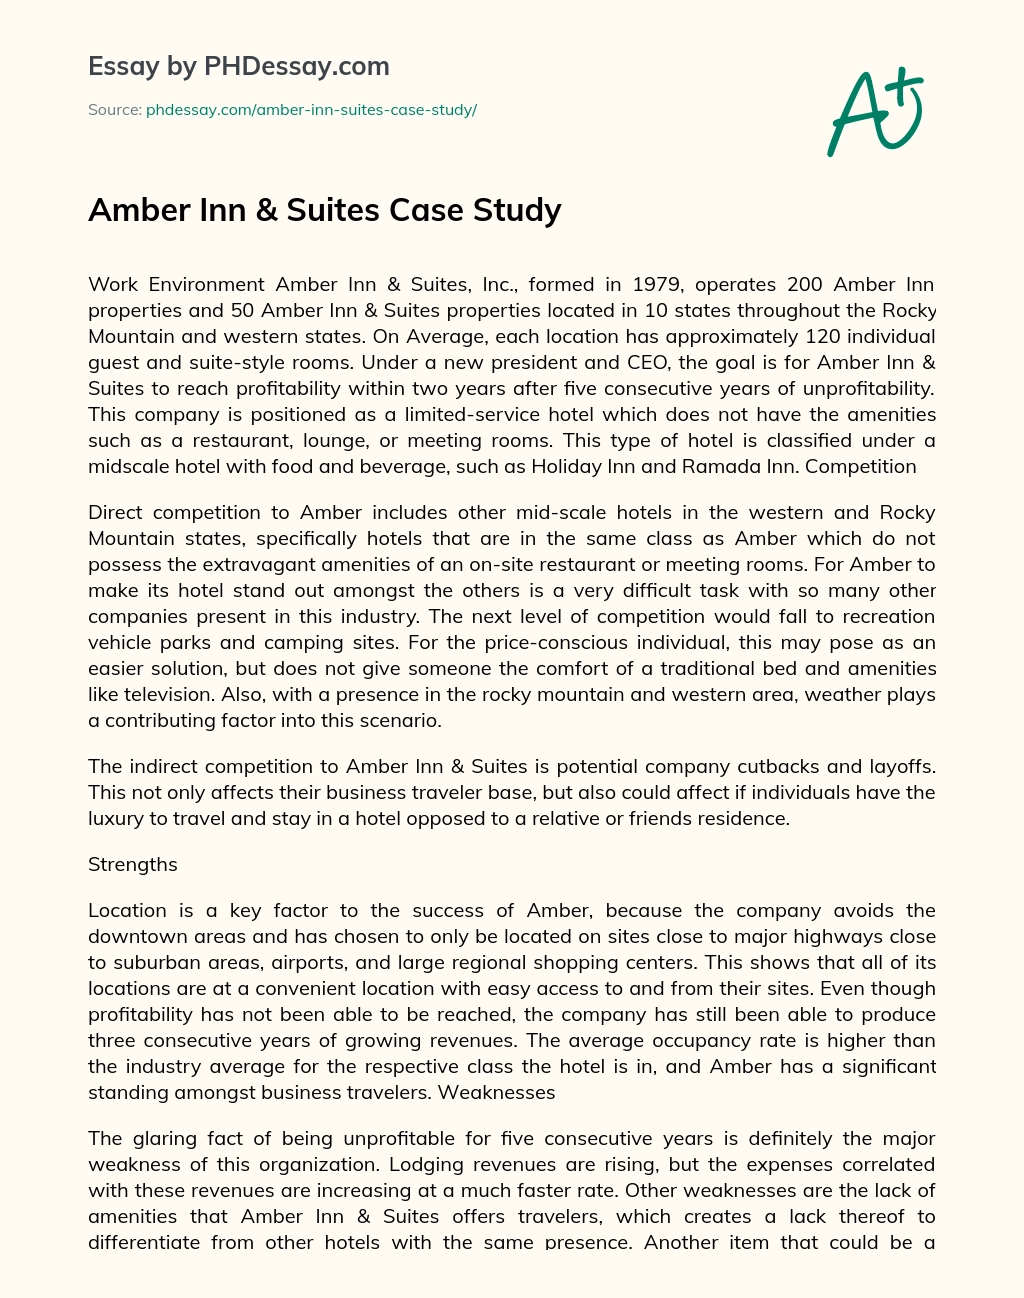 Amber Inn & Suites Case Study essay